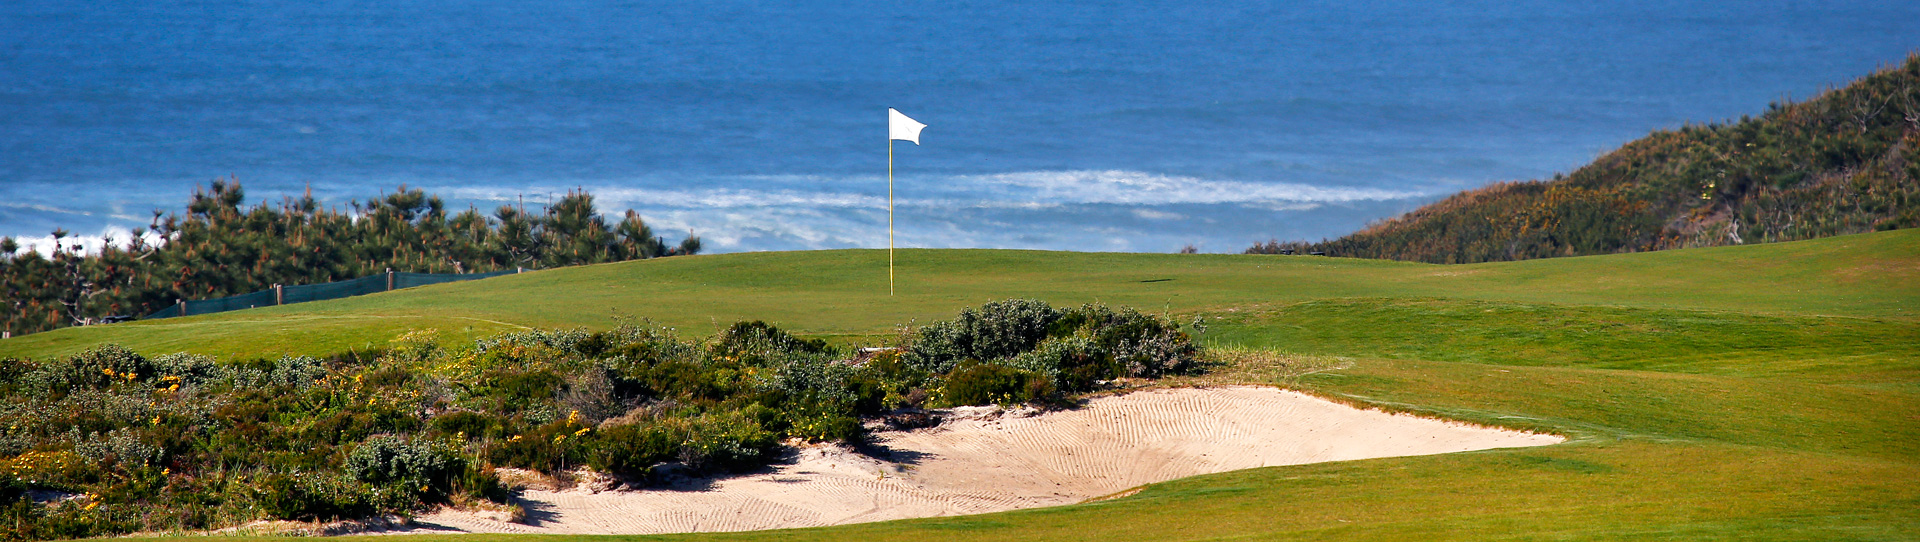 Portugal golf courses - West Cliffs Golf Links - Photo 3